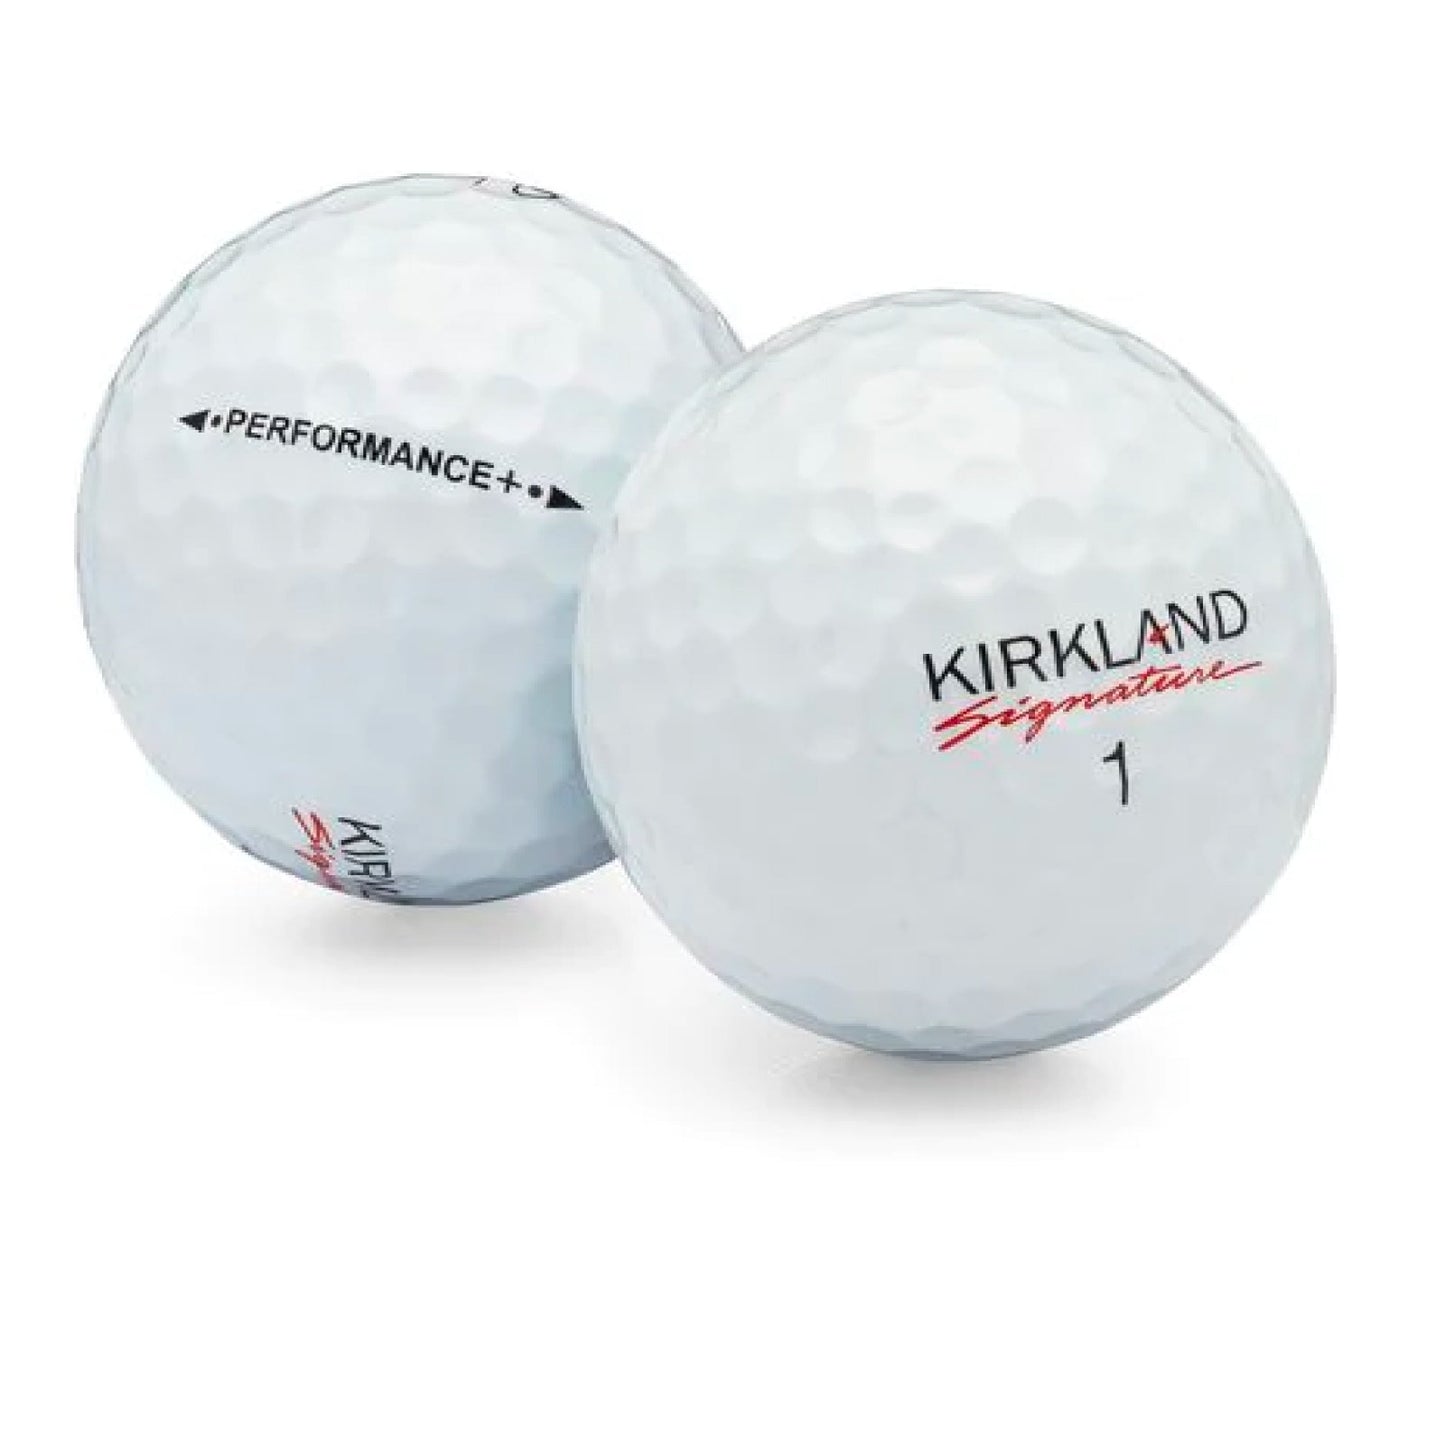 Used Kirkland Signature Performance Plus Golf Balls - 1 Dozen